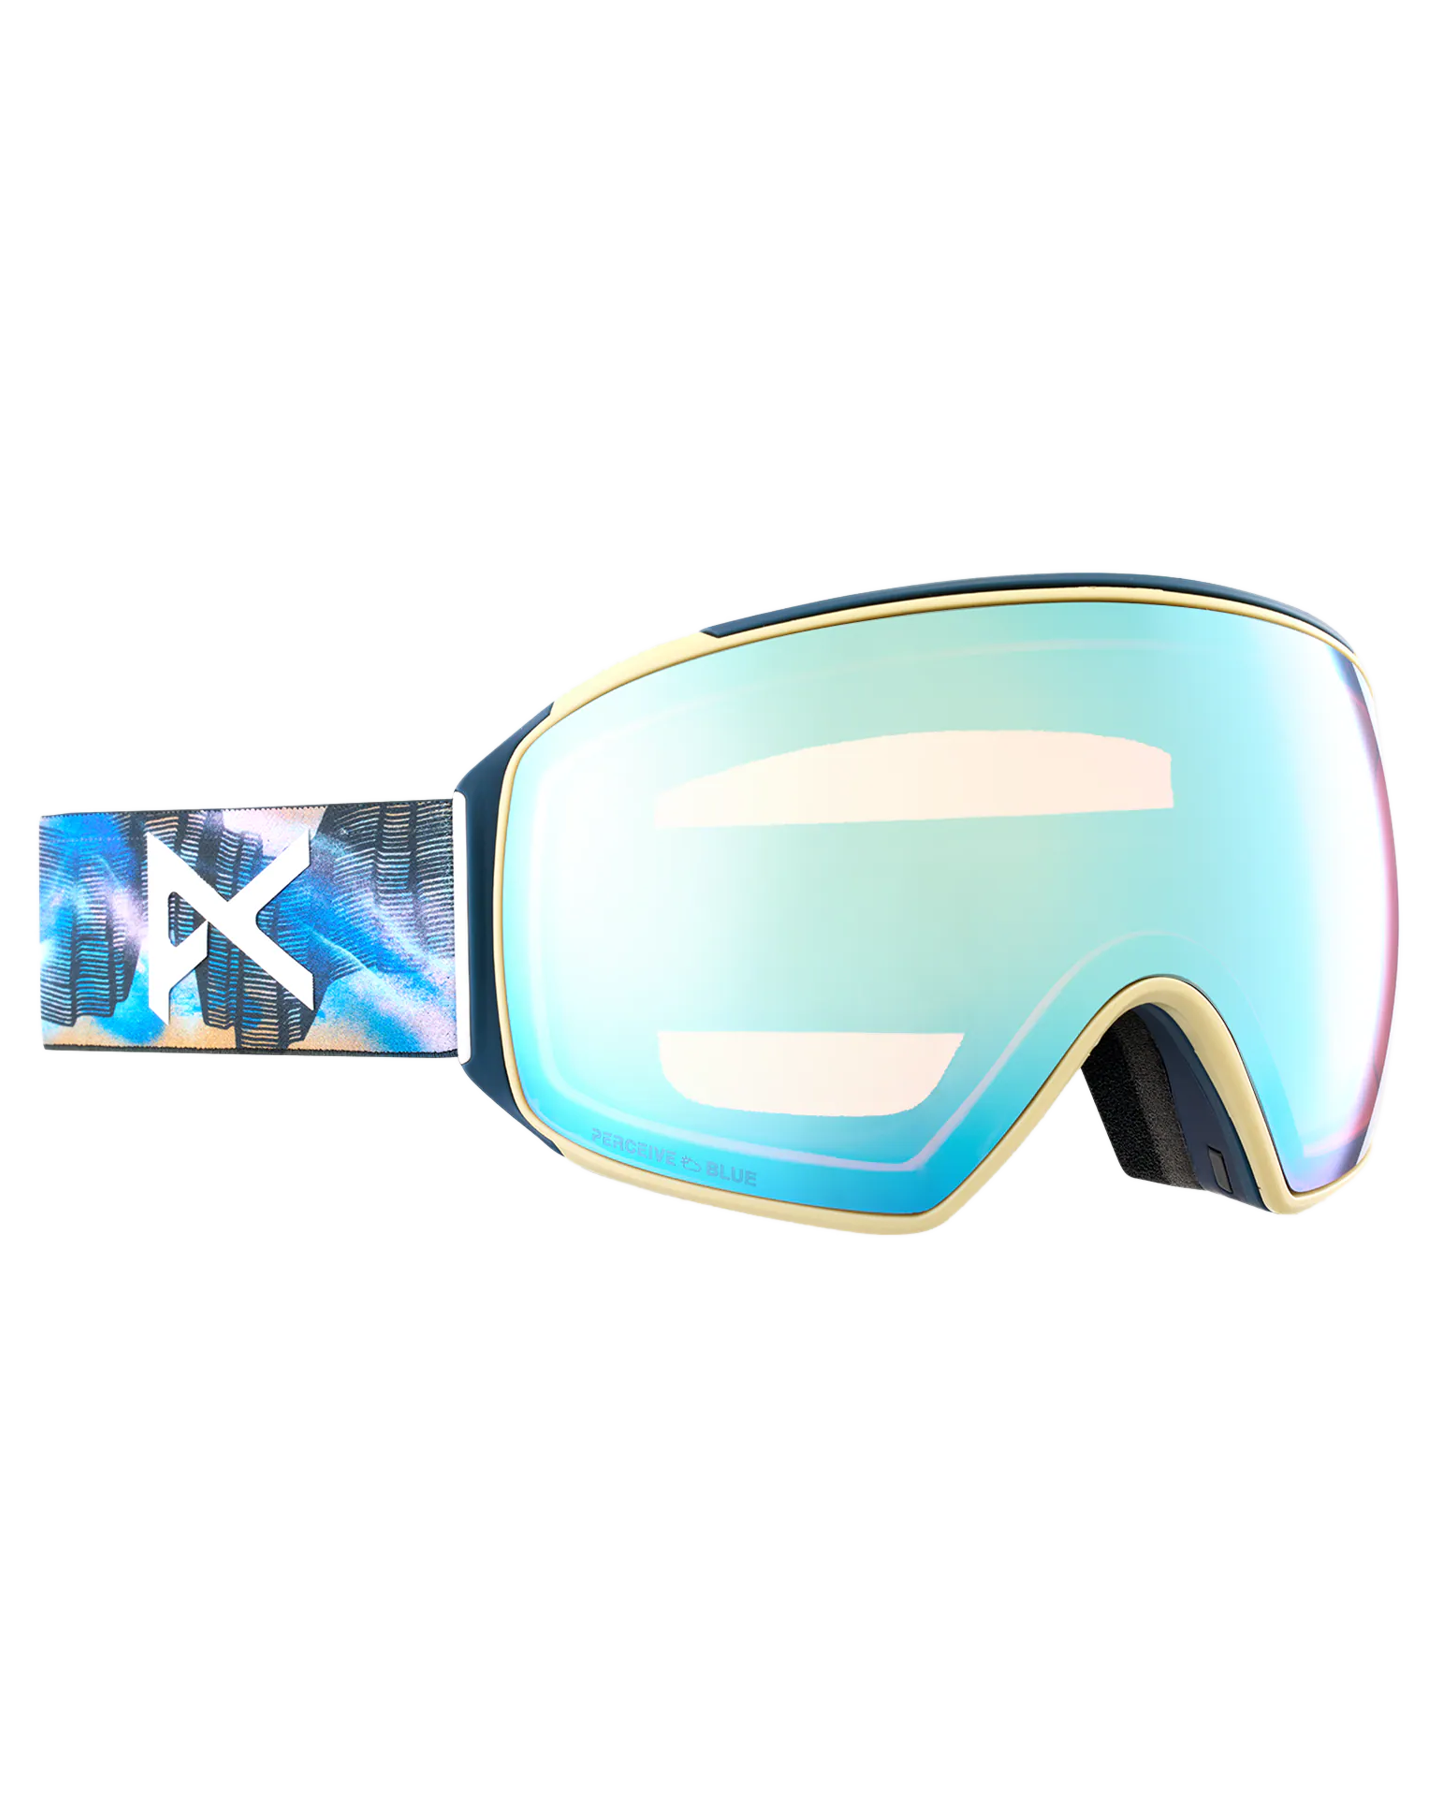 Anon M4 Toric Snow Goggles + Bonus Lens + Mfi® Face Mask - Chet Malinow/Perceive Variable Blue Lens Men's Snow Goggles - Trojan Wake Ski Snow